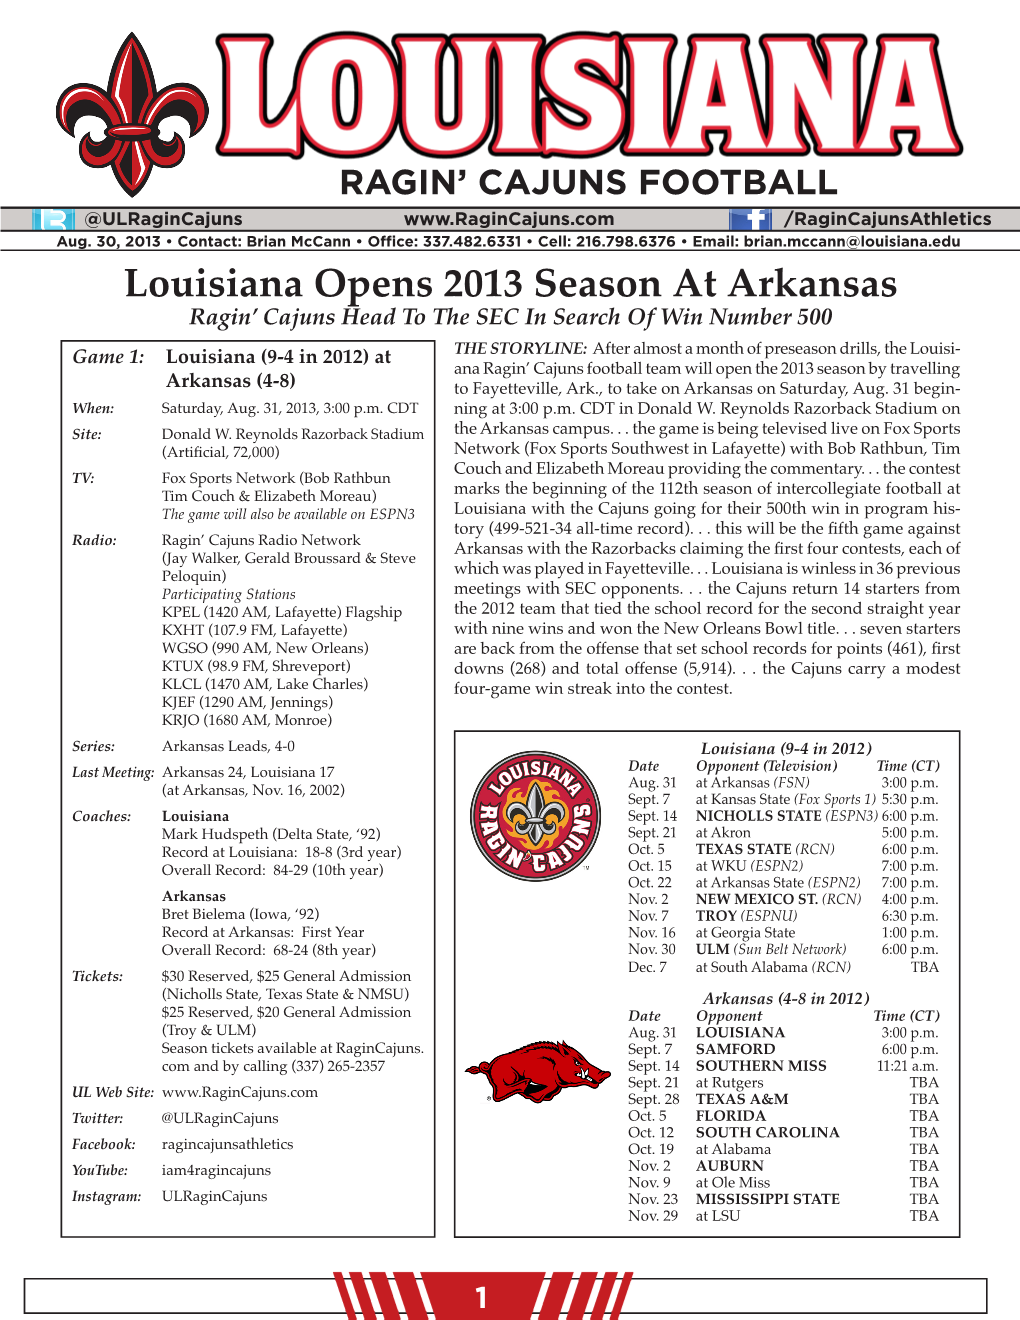 Ragin' Cajuns Football Louisiana Overall Team Statistics (As of Feb 13, 2013) All Games